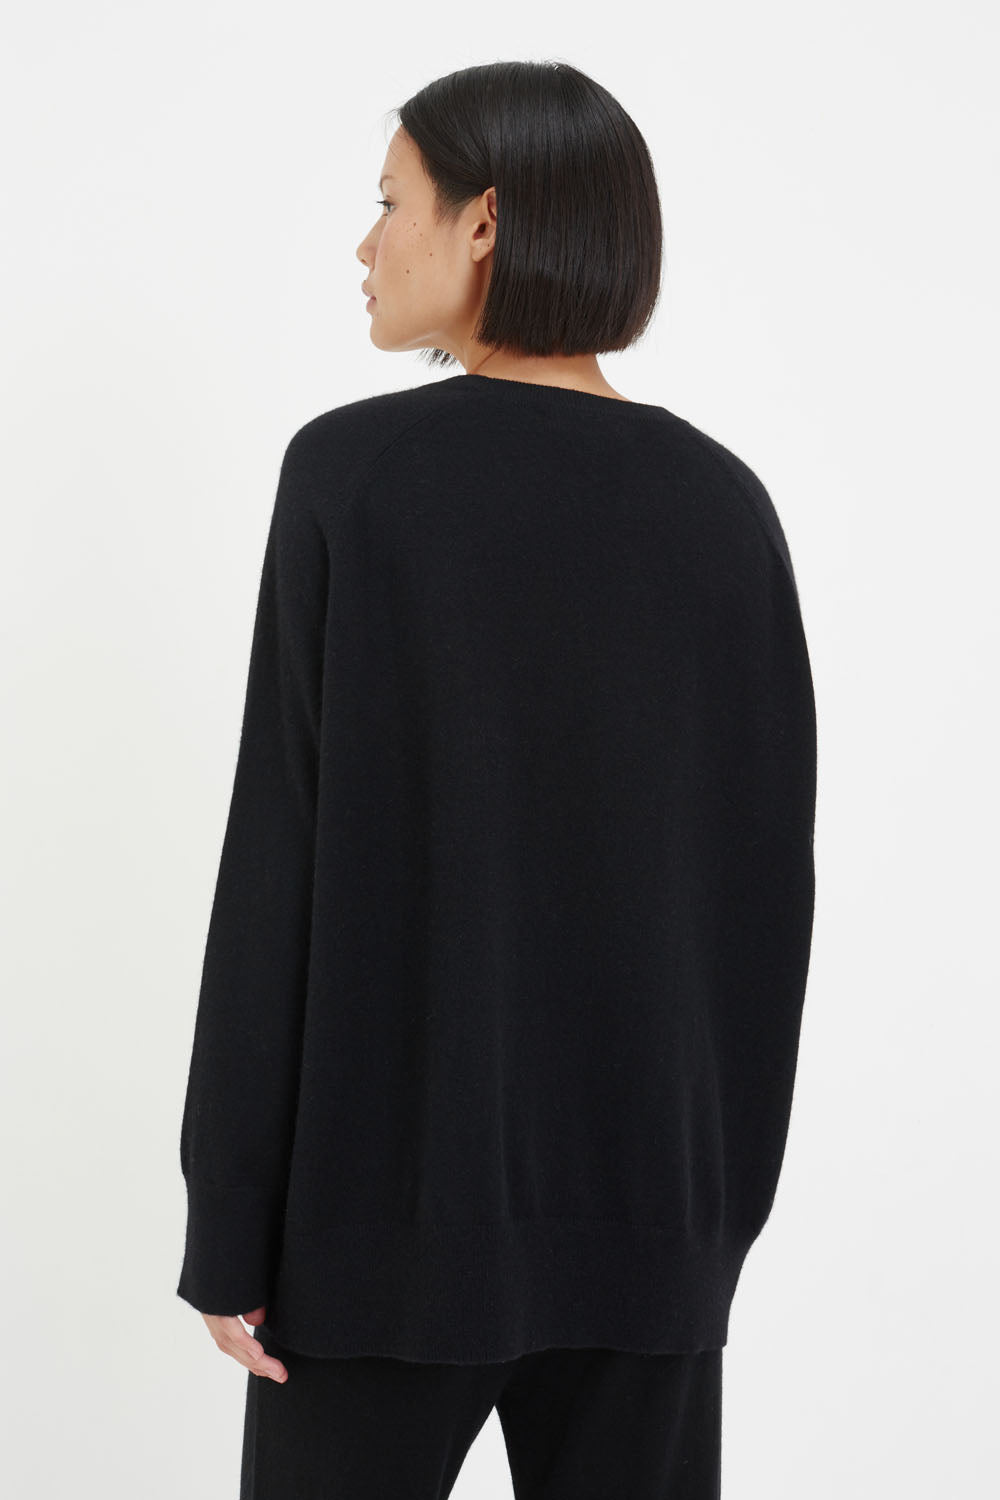 Black Cashmere Slouchy Sweater – Chinti & Parker UK